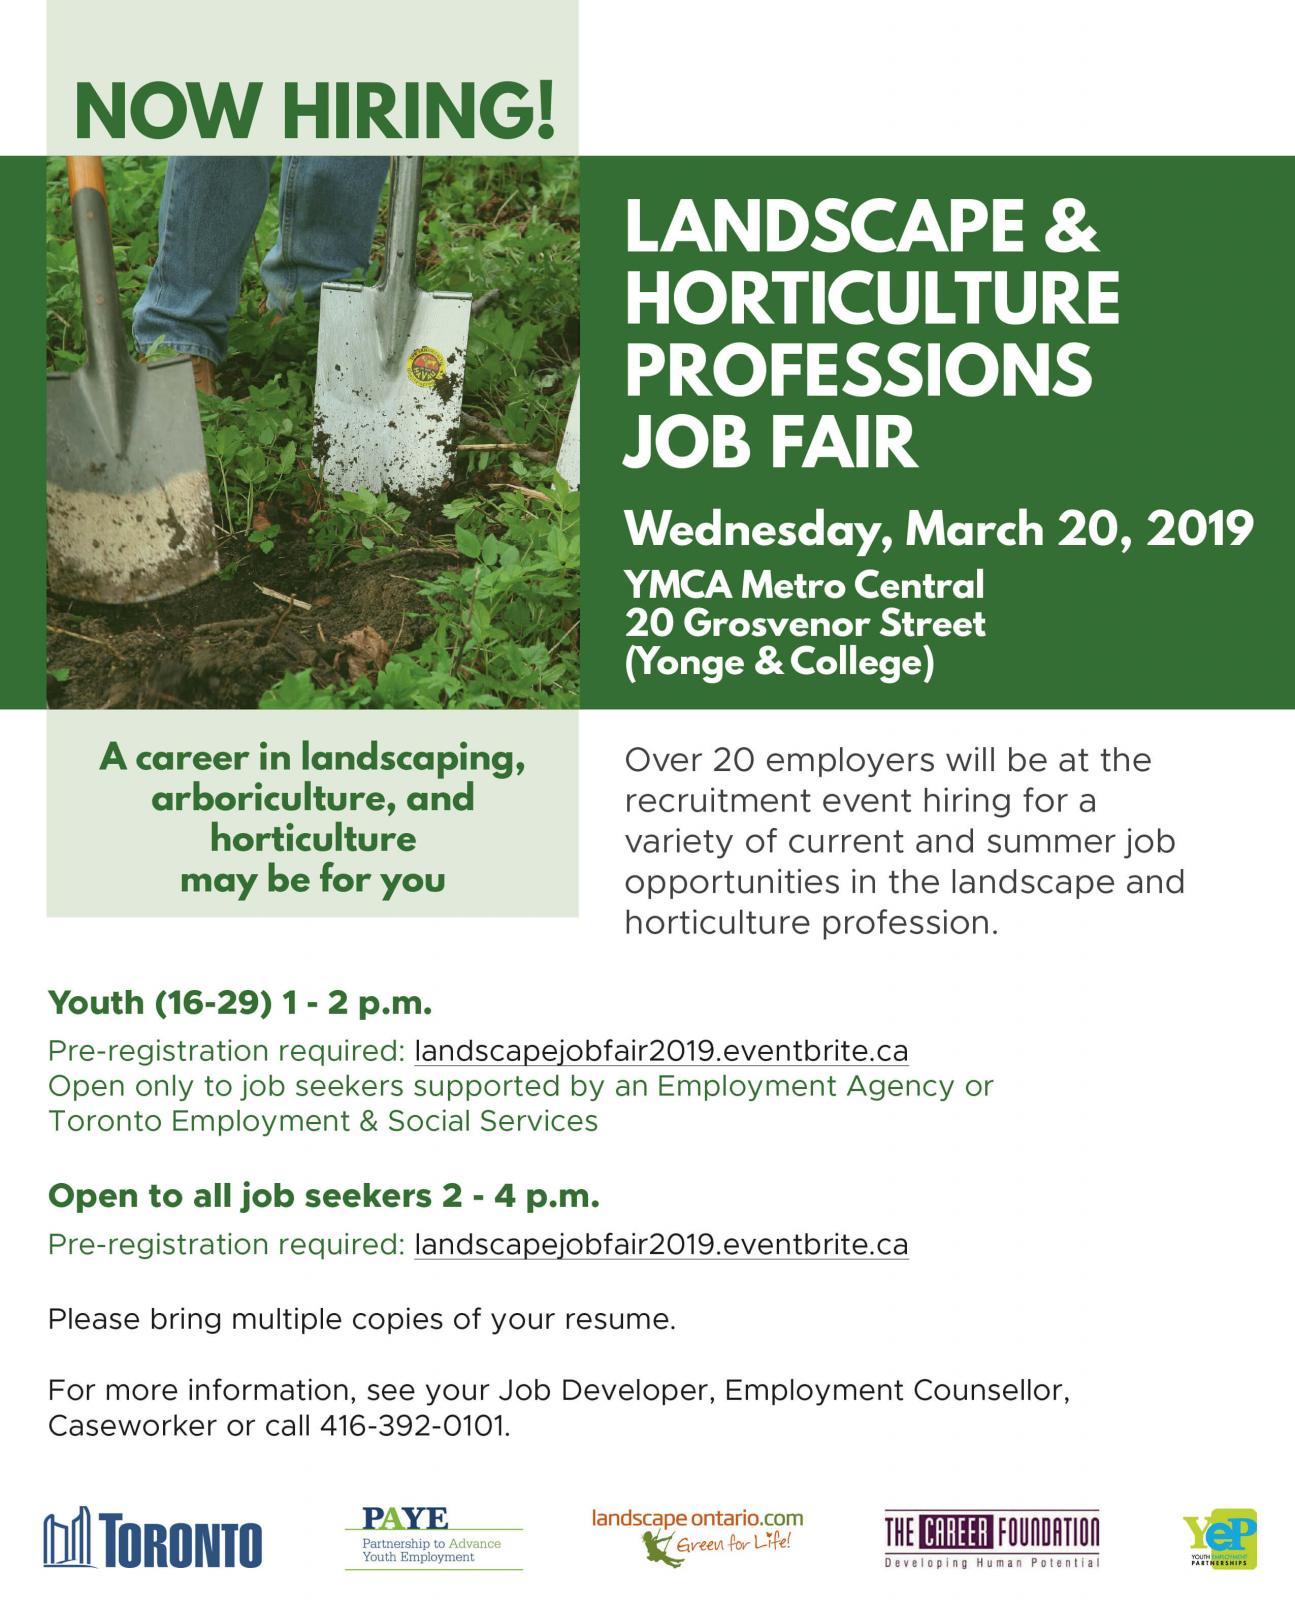 Landscape Job Fair 2019 Ontario, Landscaping Jobs Hiring